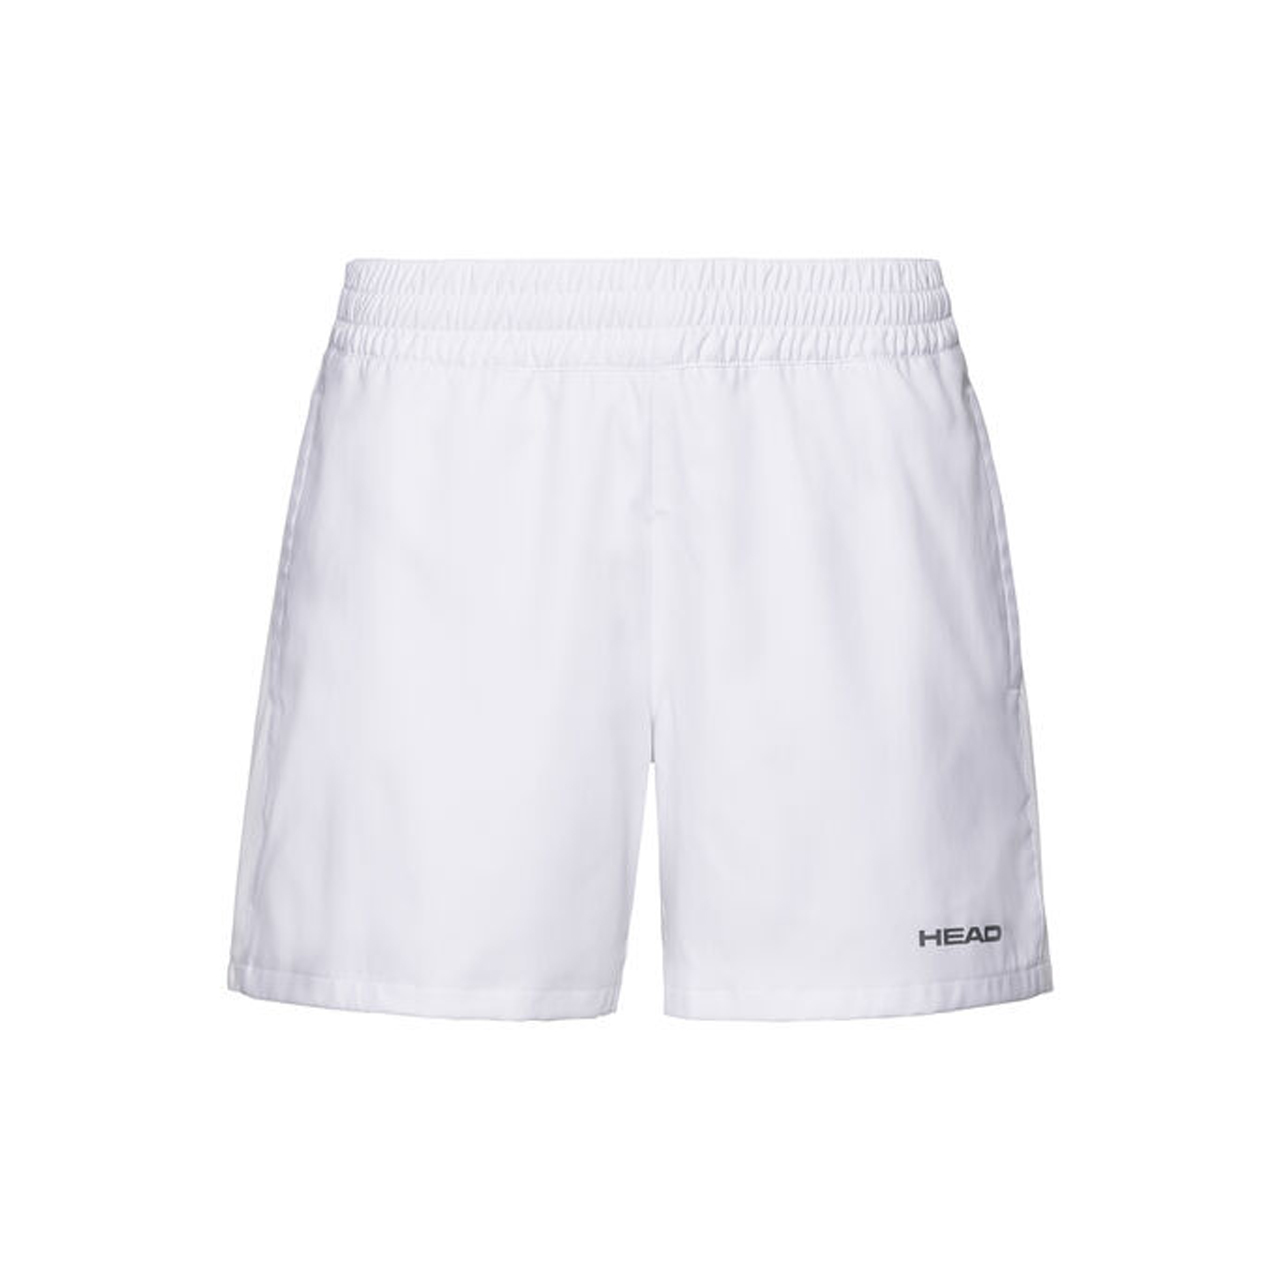 Damen Tennis-Shorts Club